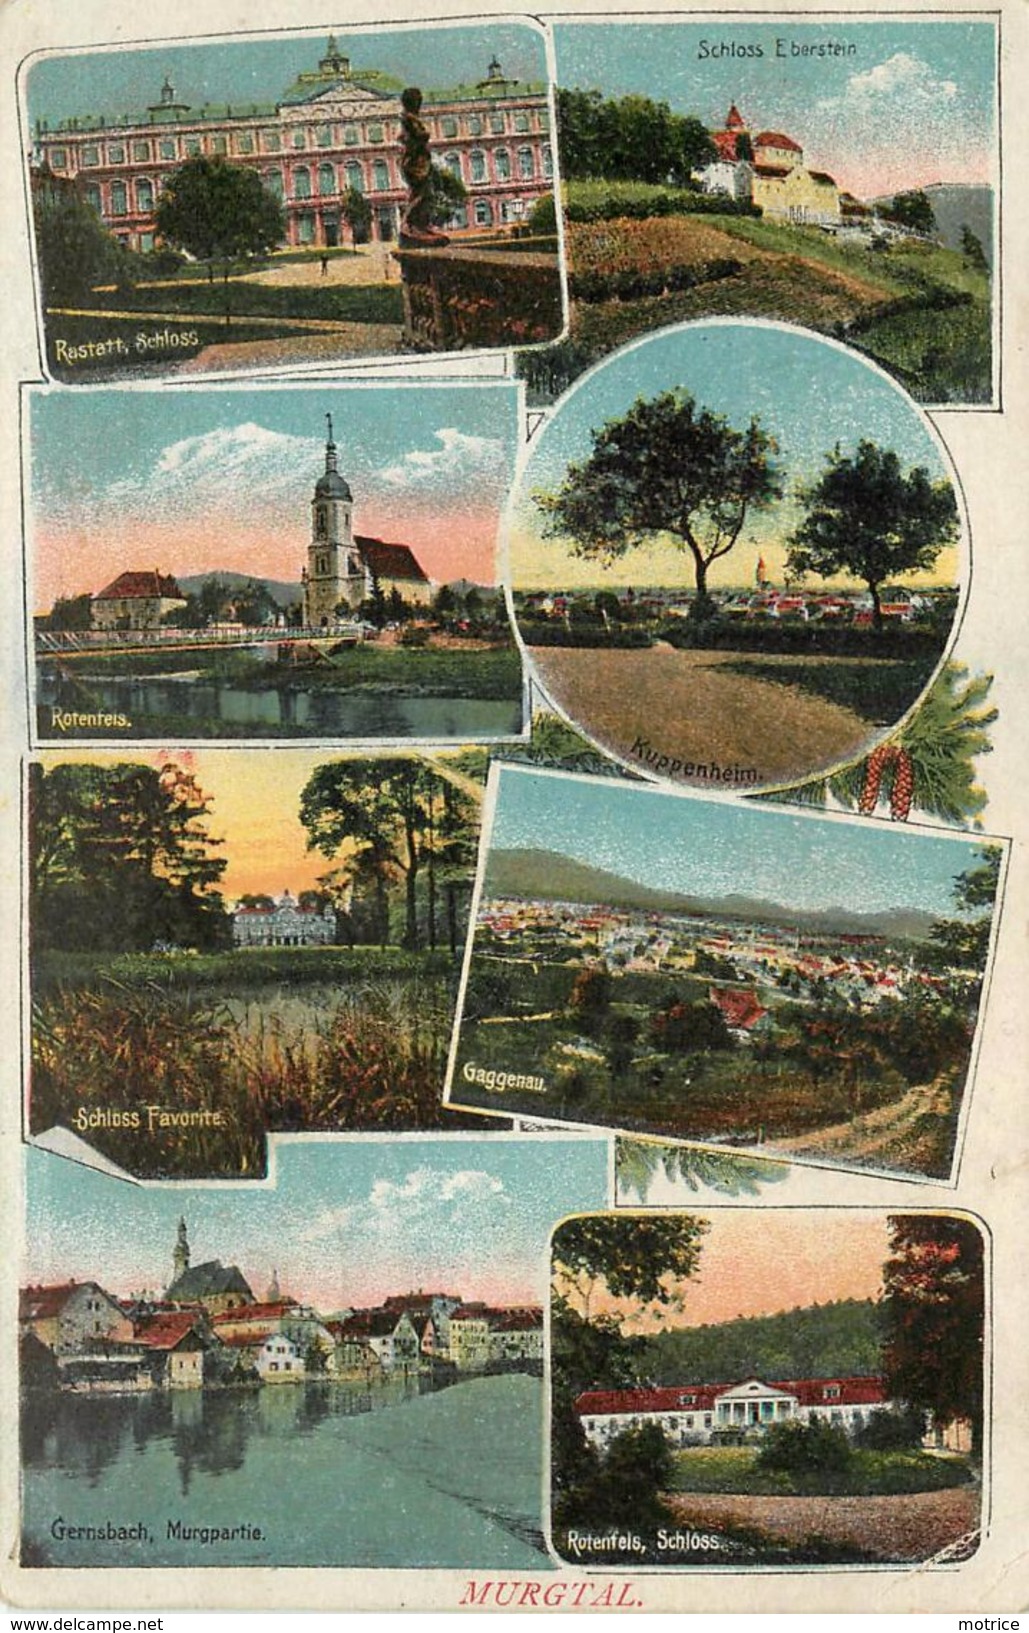 MURGTAL - Carte Multi-vues. - Gernsbach